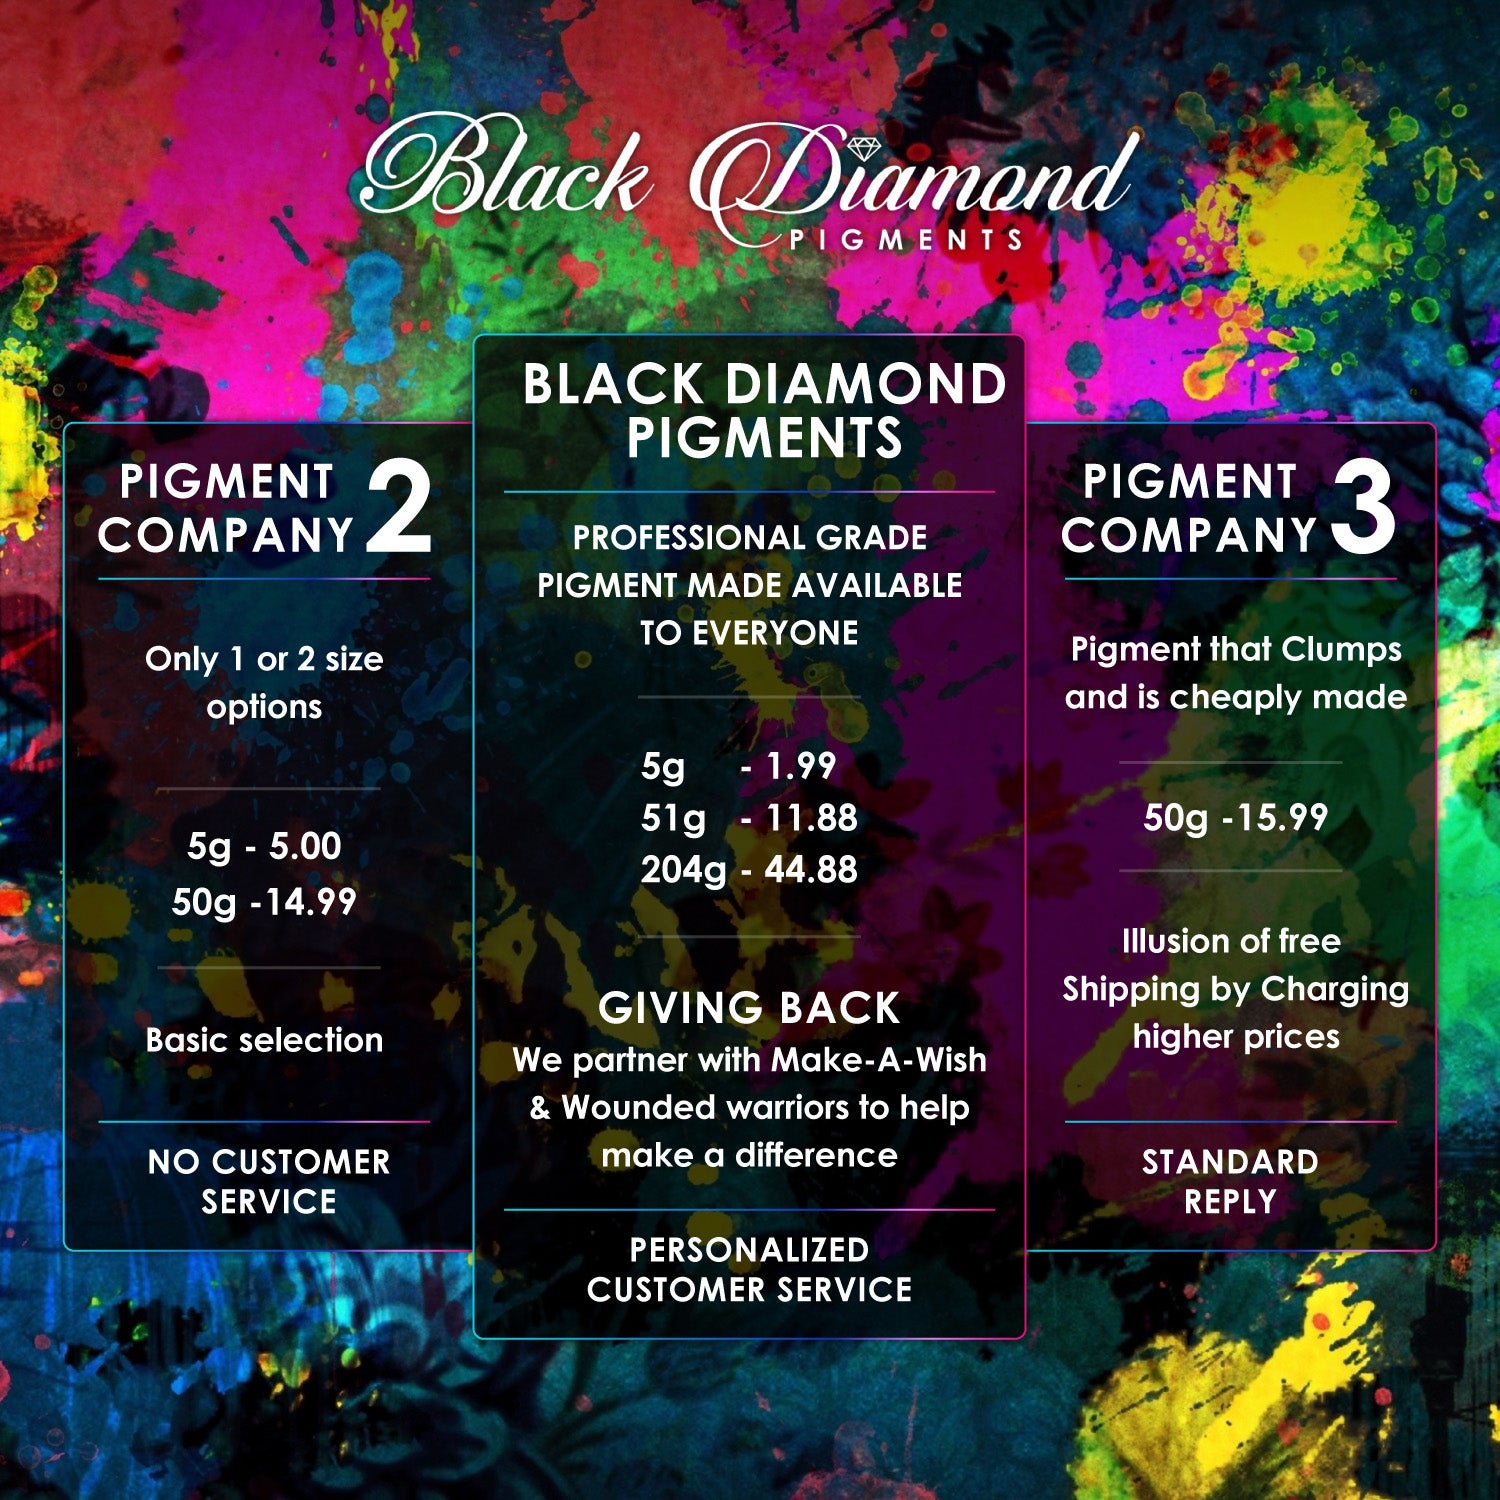 "AZTEC GOLD" Make-A-Wish Black Diamond Pigments